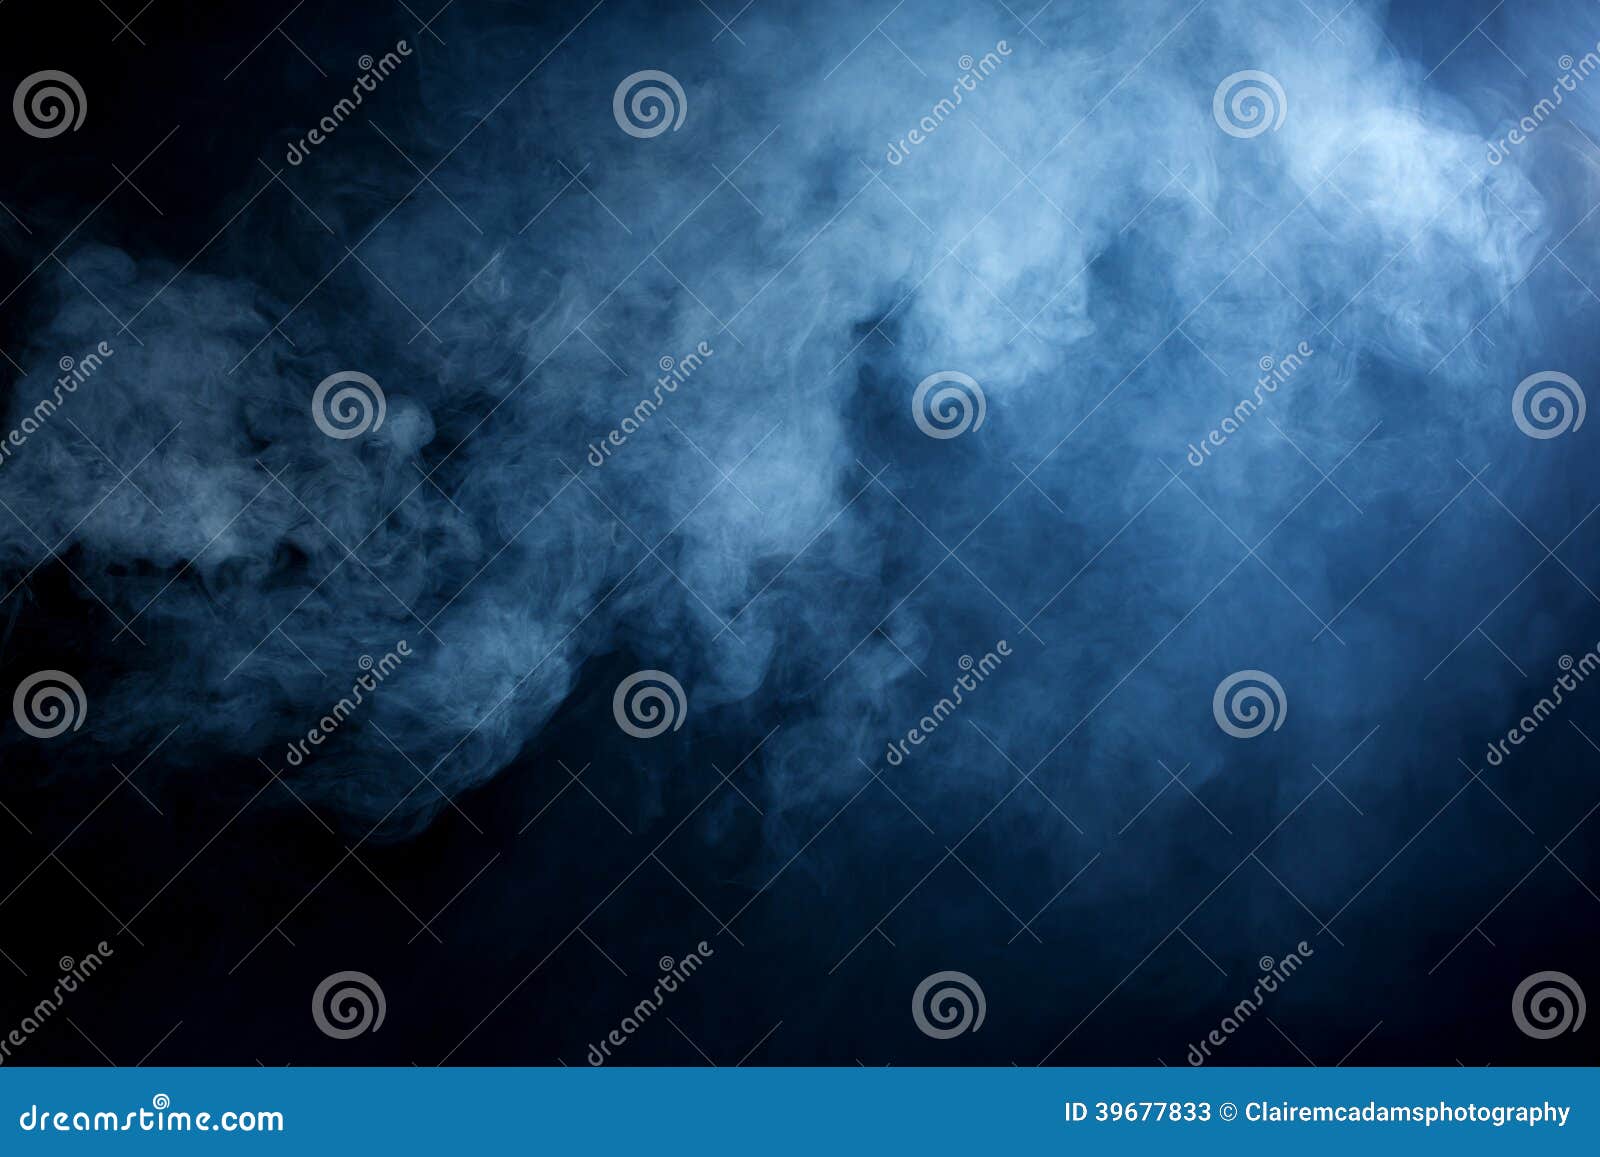 blue/grey smoke on black background